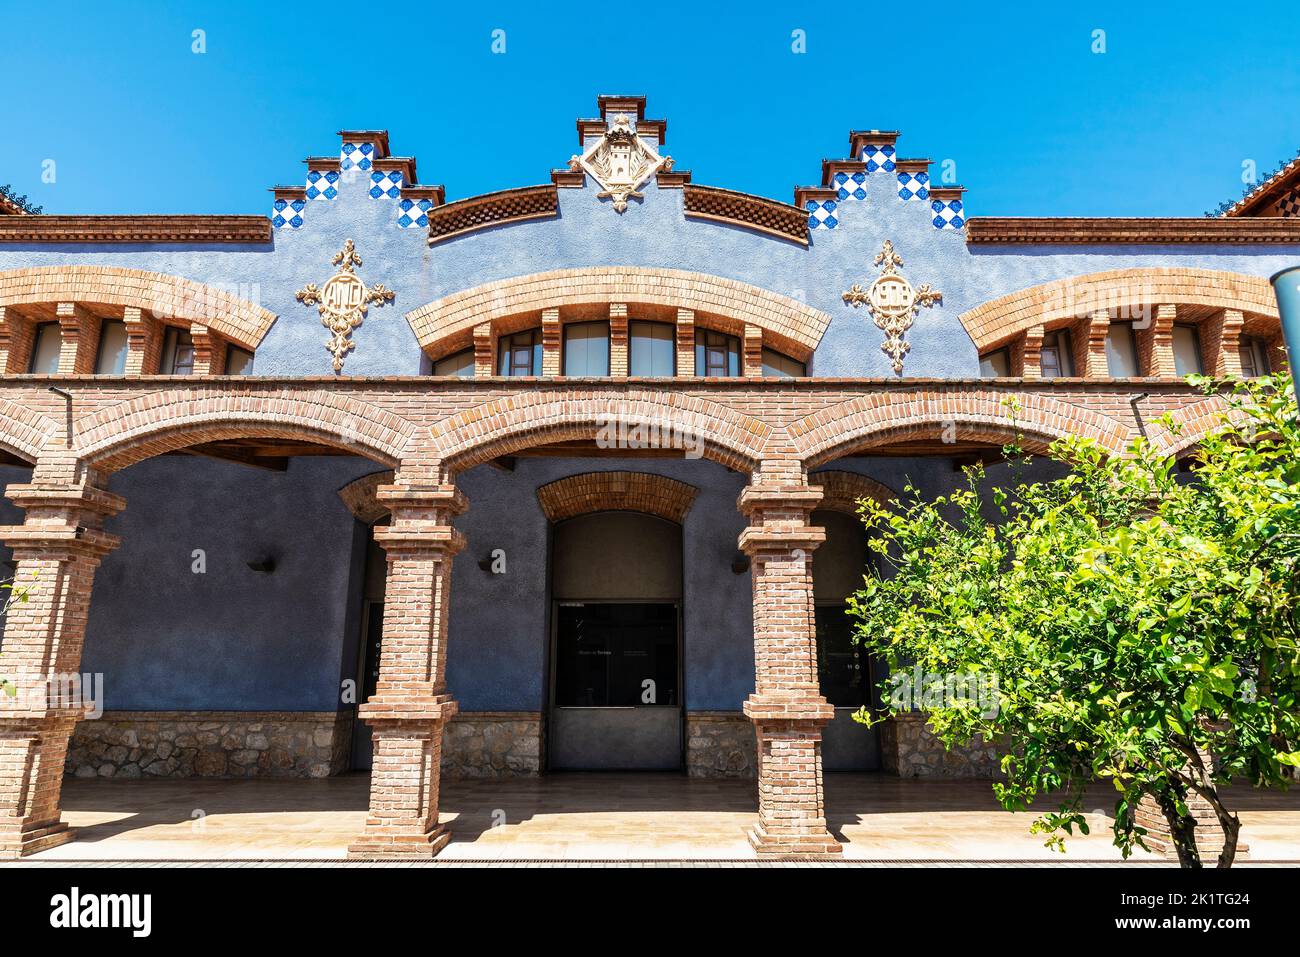 Facade of the old Slaughterhouse of Tortosa, catalan modernism building in Tortosa, Tarragona, Catalonia, Spain Stock Photo